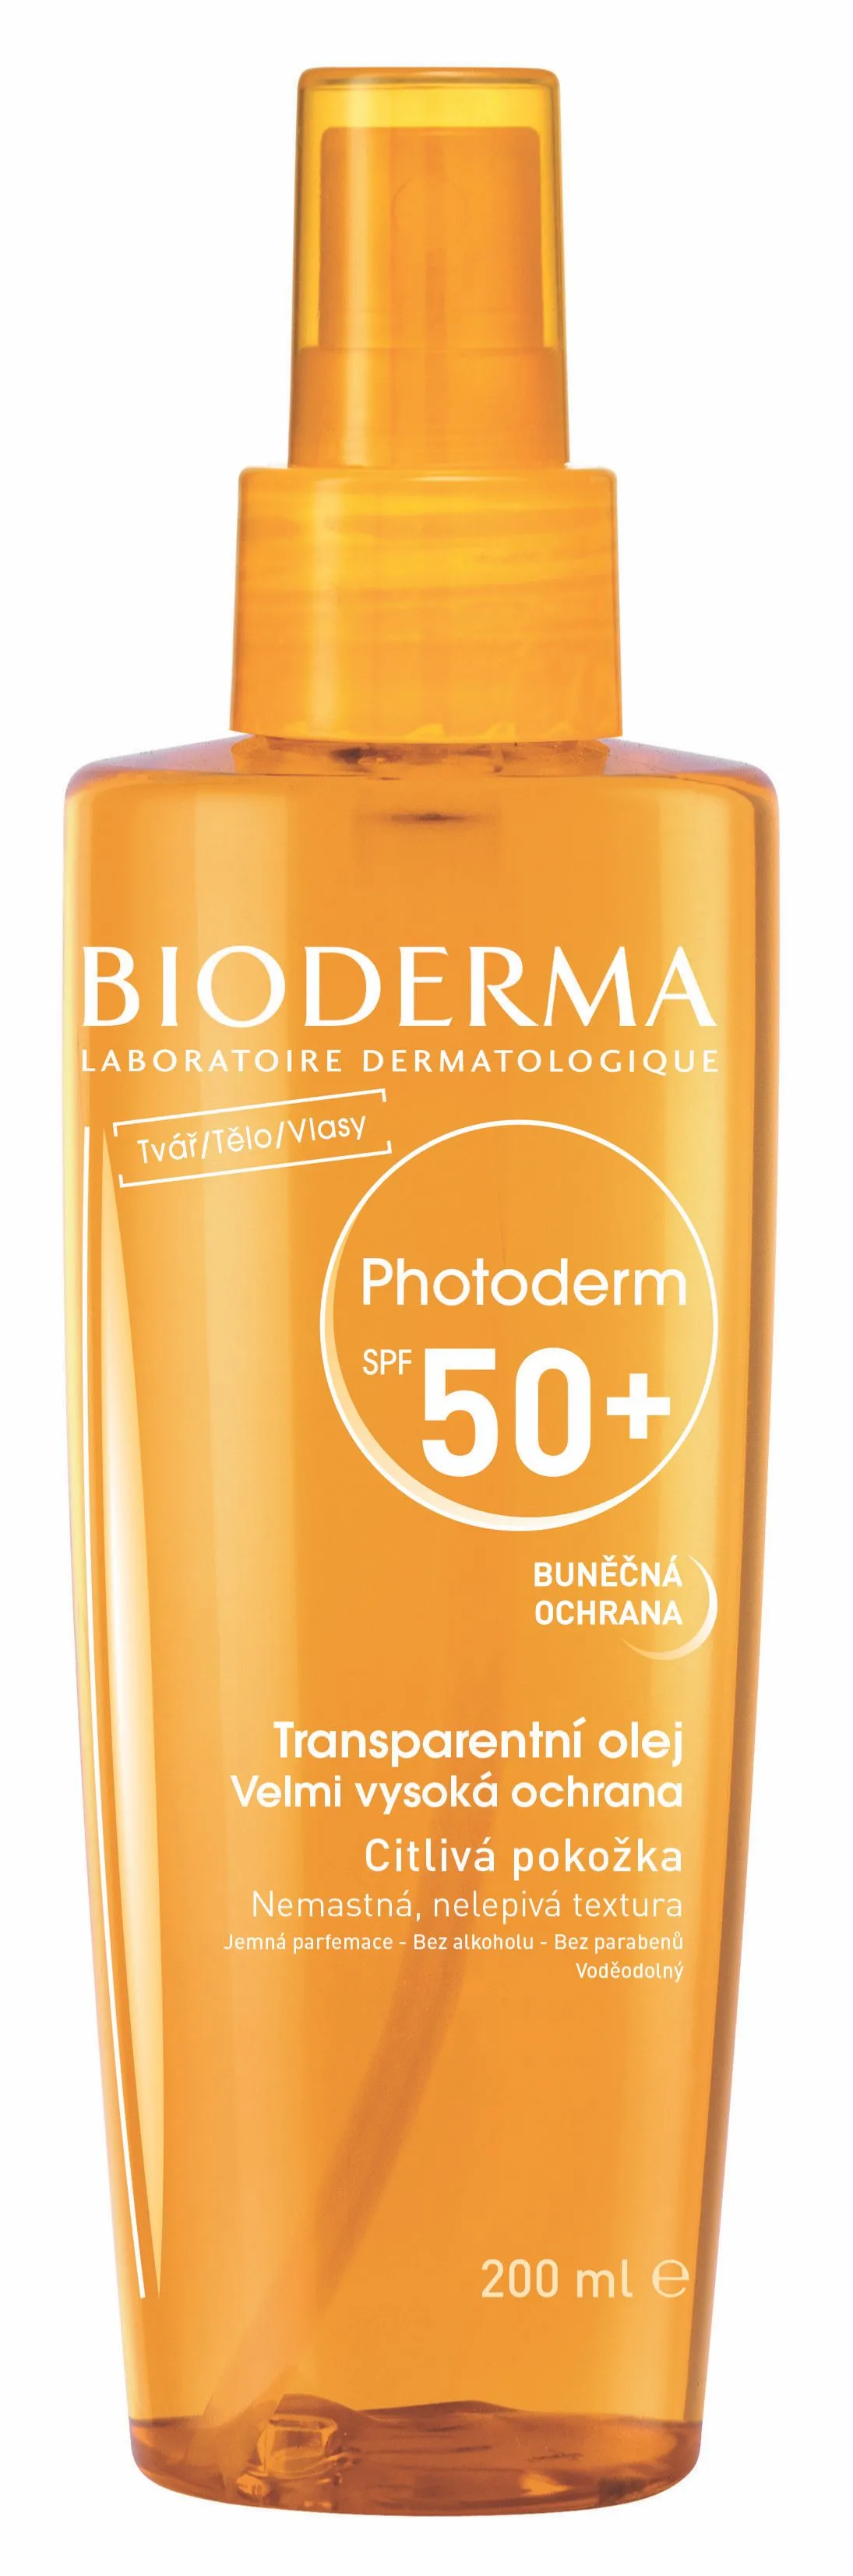 BIODERMA Photoderm Transparentní olej SPF50+ 200ml